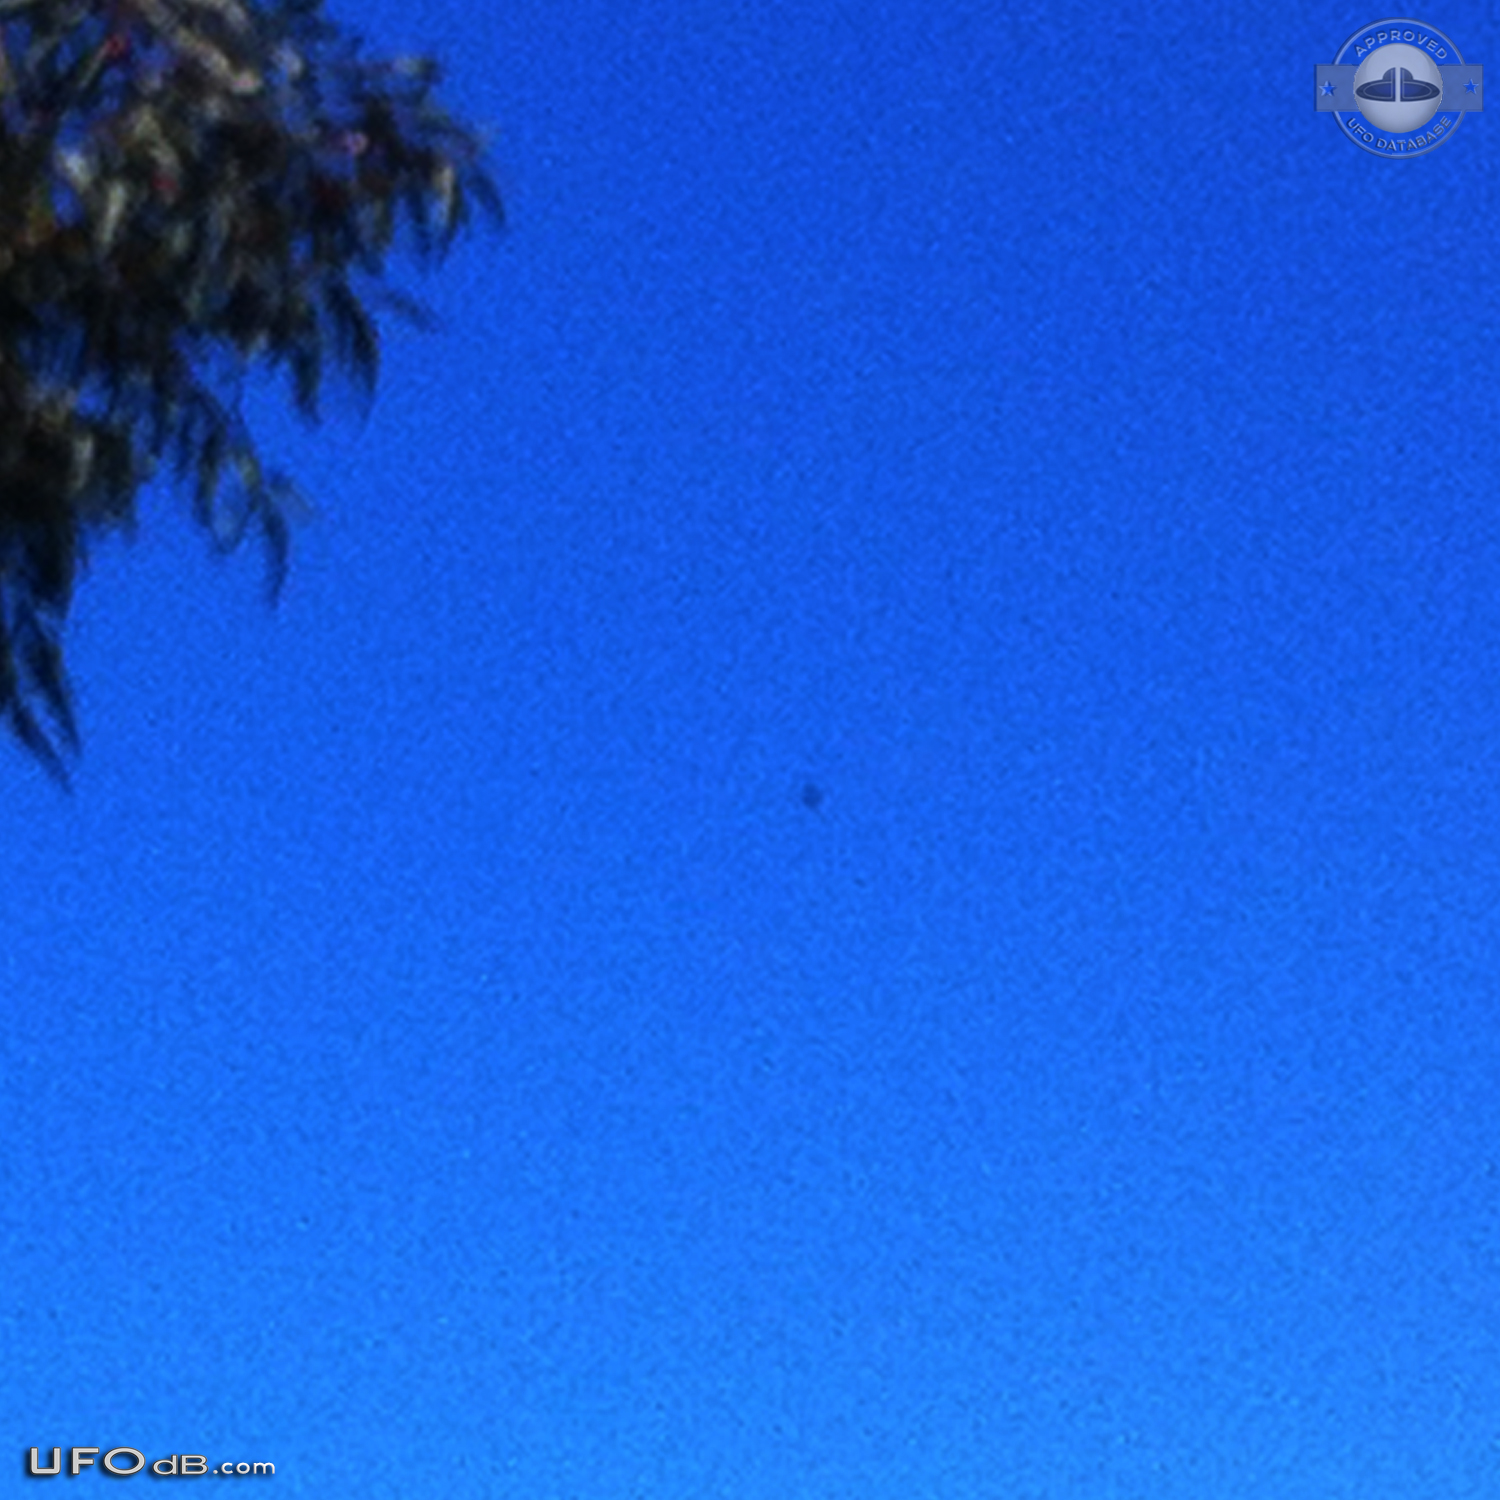 Donut Shaped UFO in blue sky over Blackburn North, Australia in 2012 UFO Picture #575-3